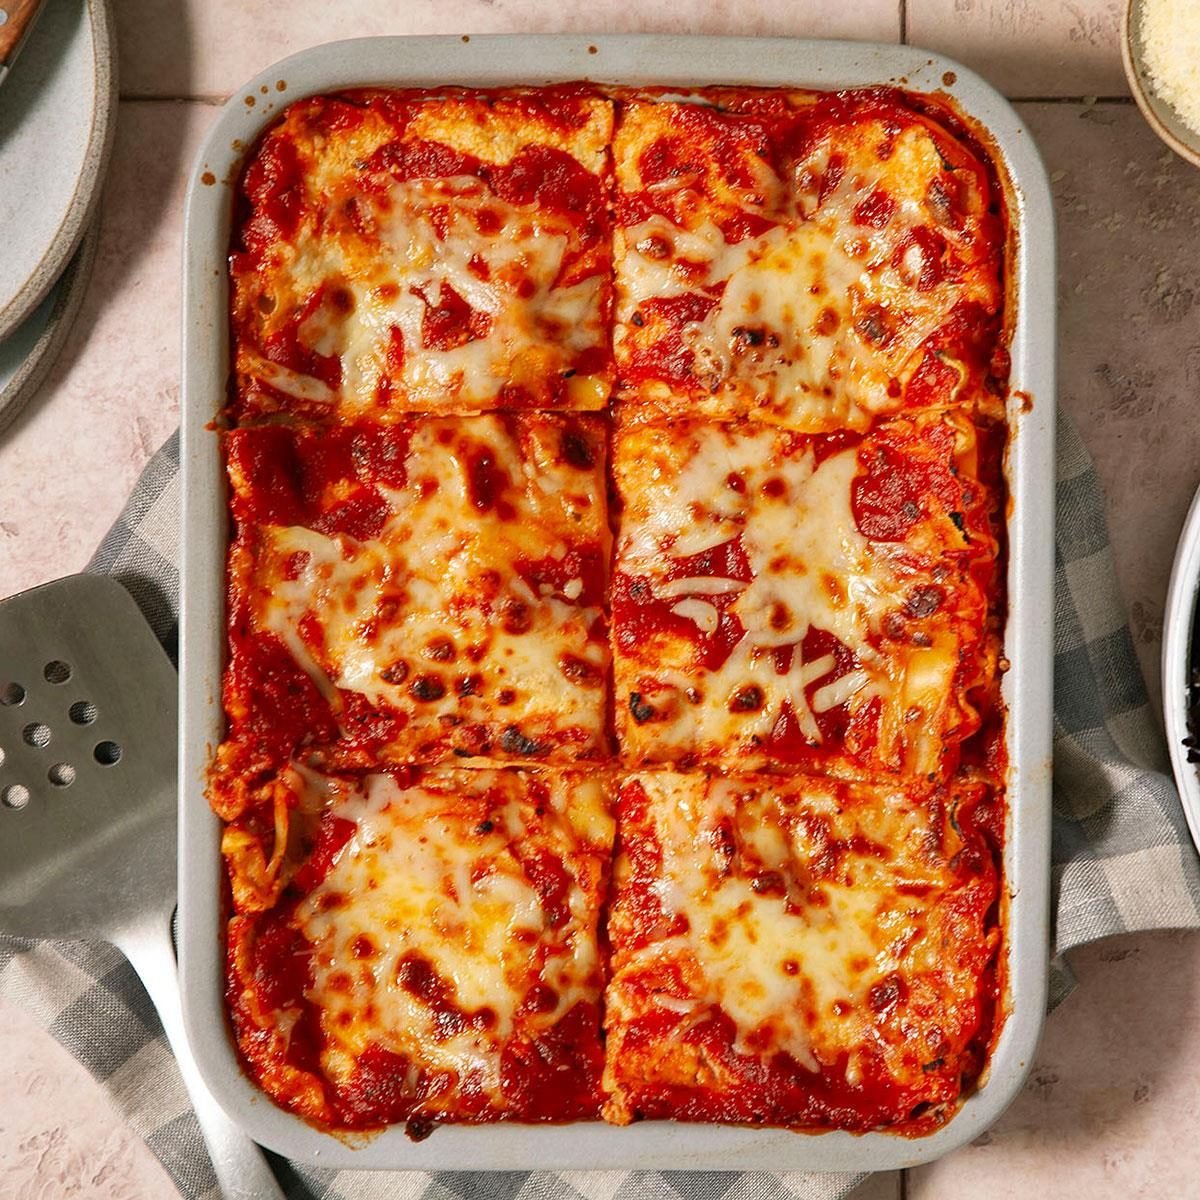 Weeknight Lazy Lasagna Recipe: How to Make It